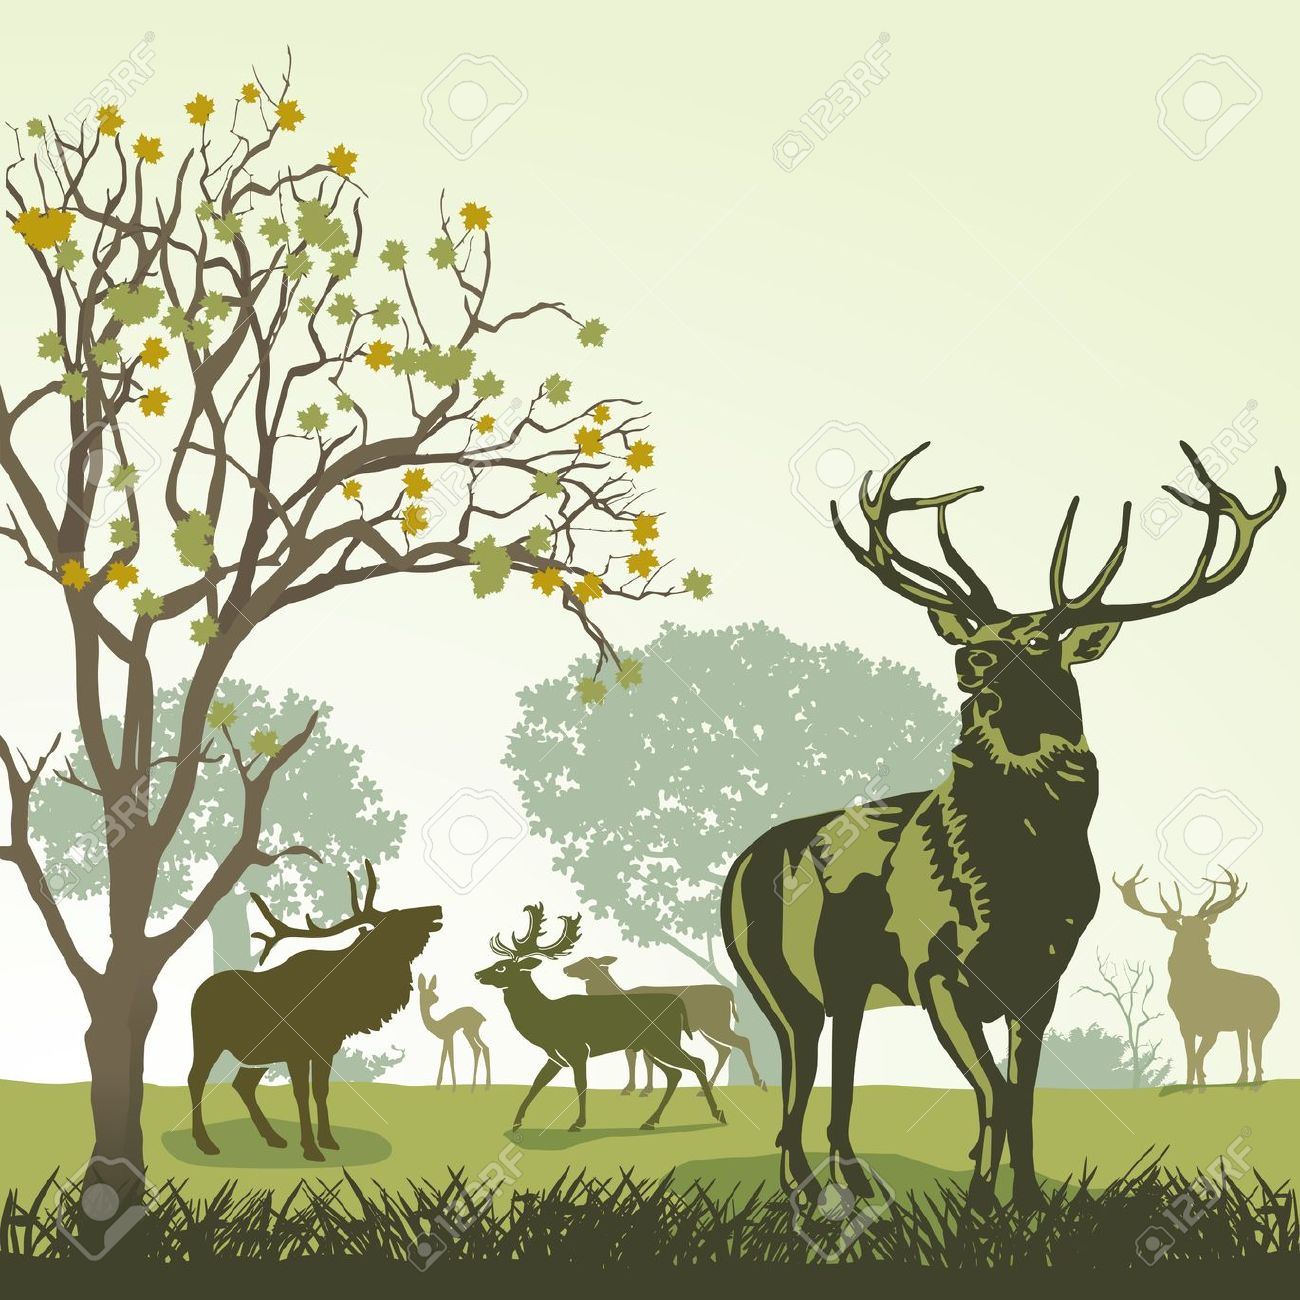 fallow deer: Deer and wildlife .